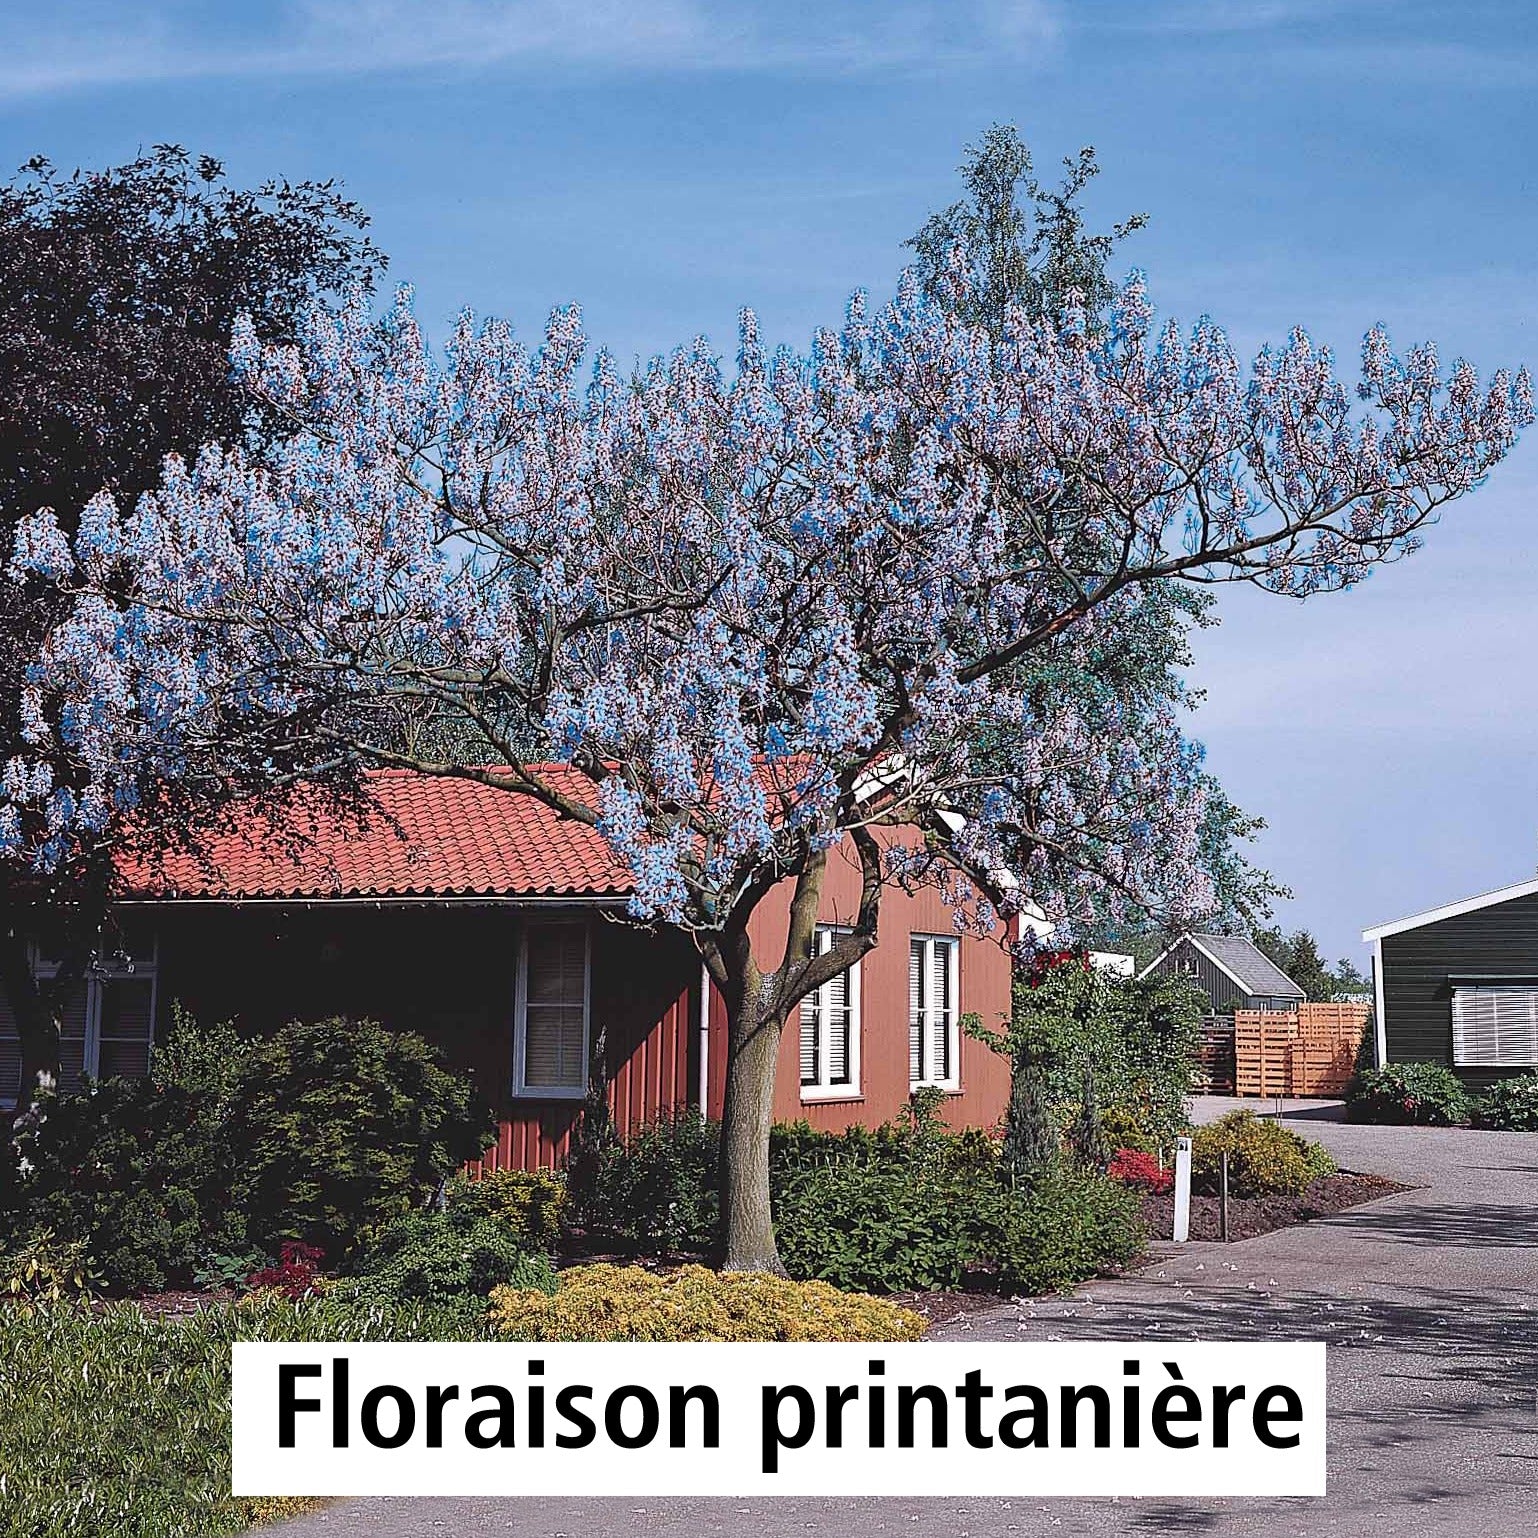 Blauglockenbaum - Paulownia tomentosa - Bäume